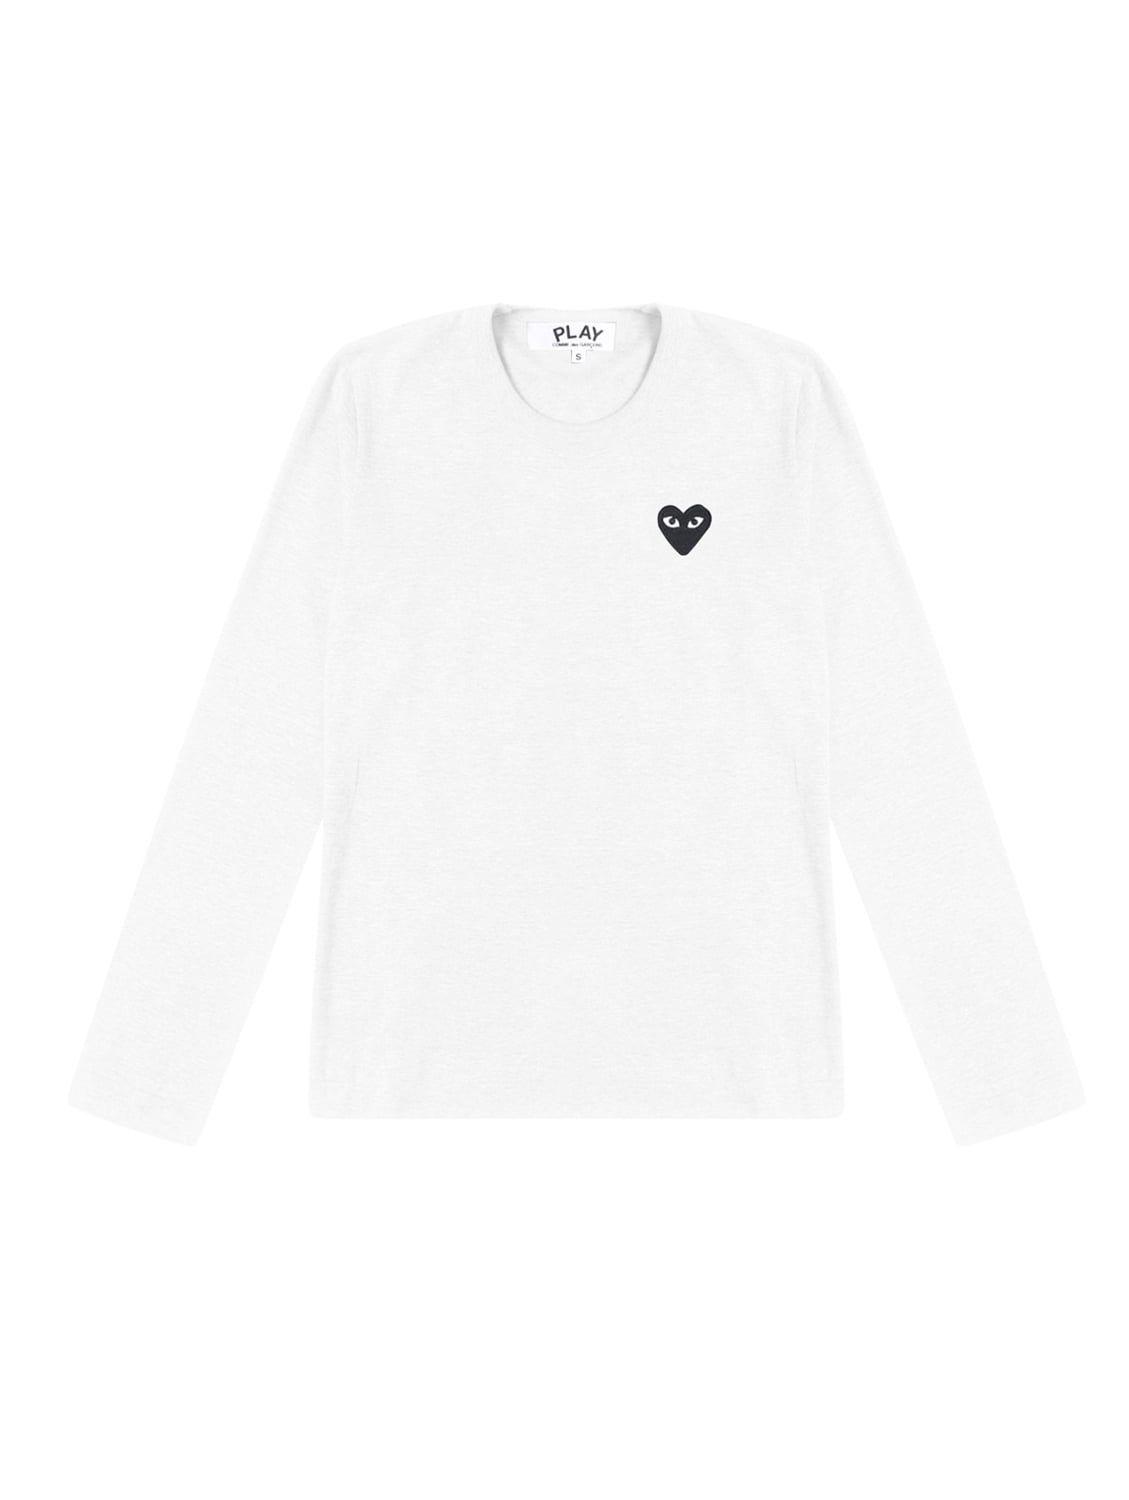 Comme Des Garcons Heart Logo - Comme des Garcons Play Black Heart Logo T-Shirt in White | Hervia ...